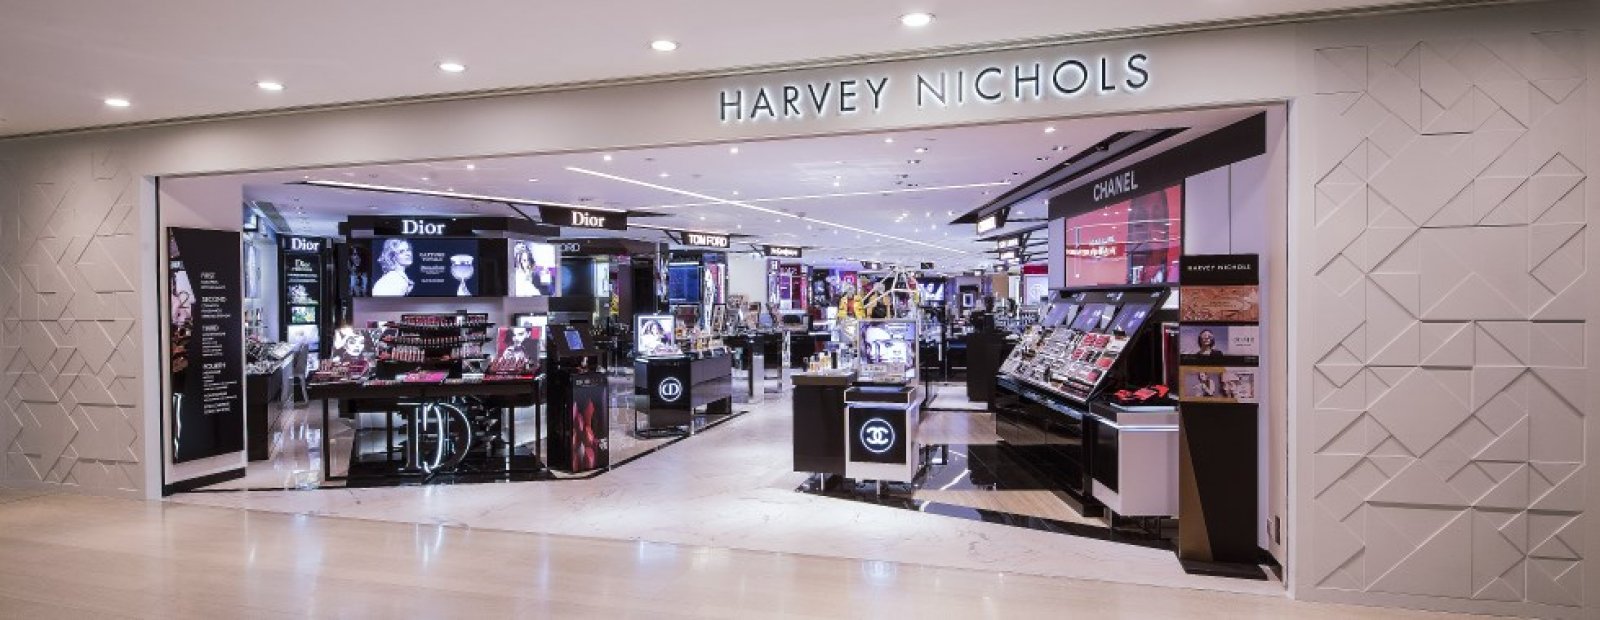 Harvey Nichols Store